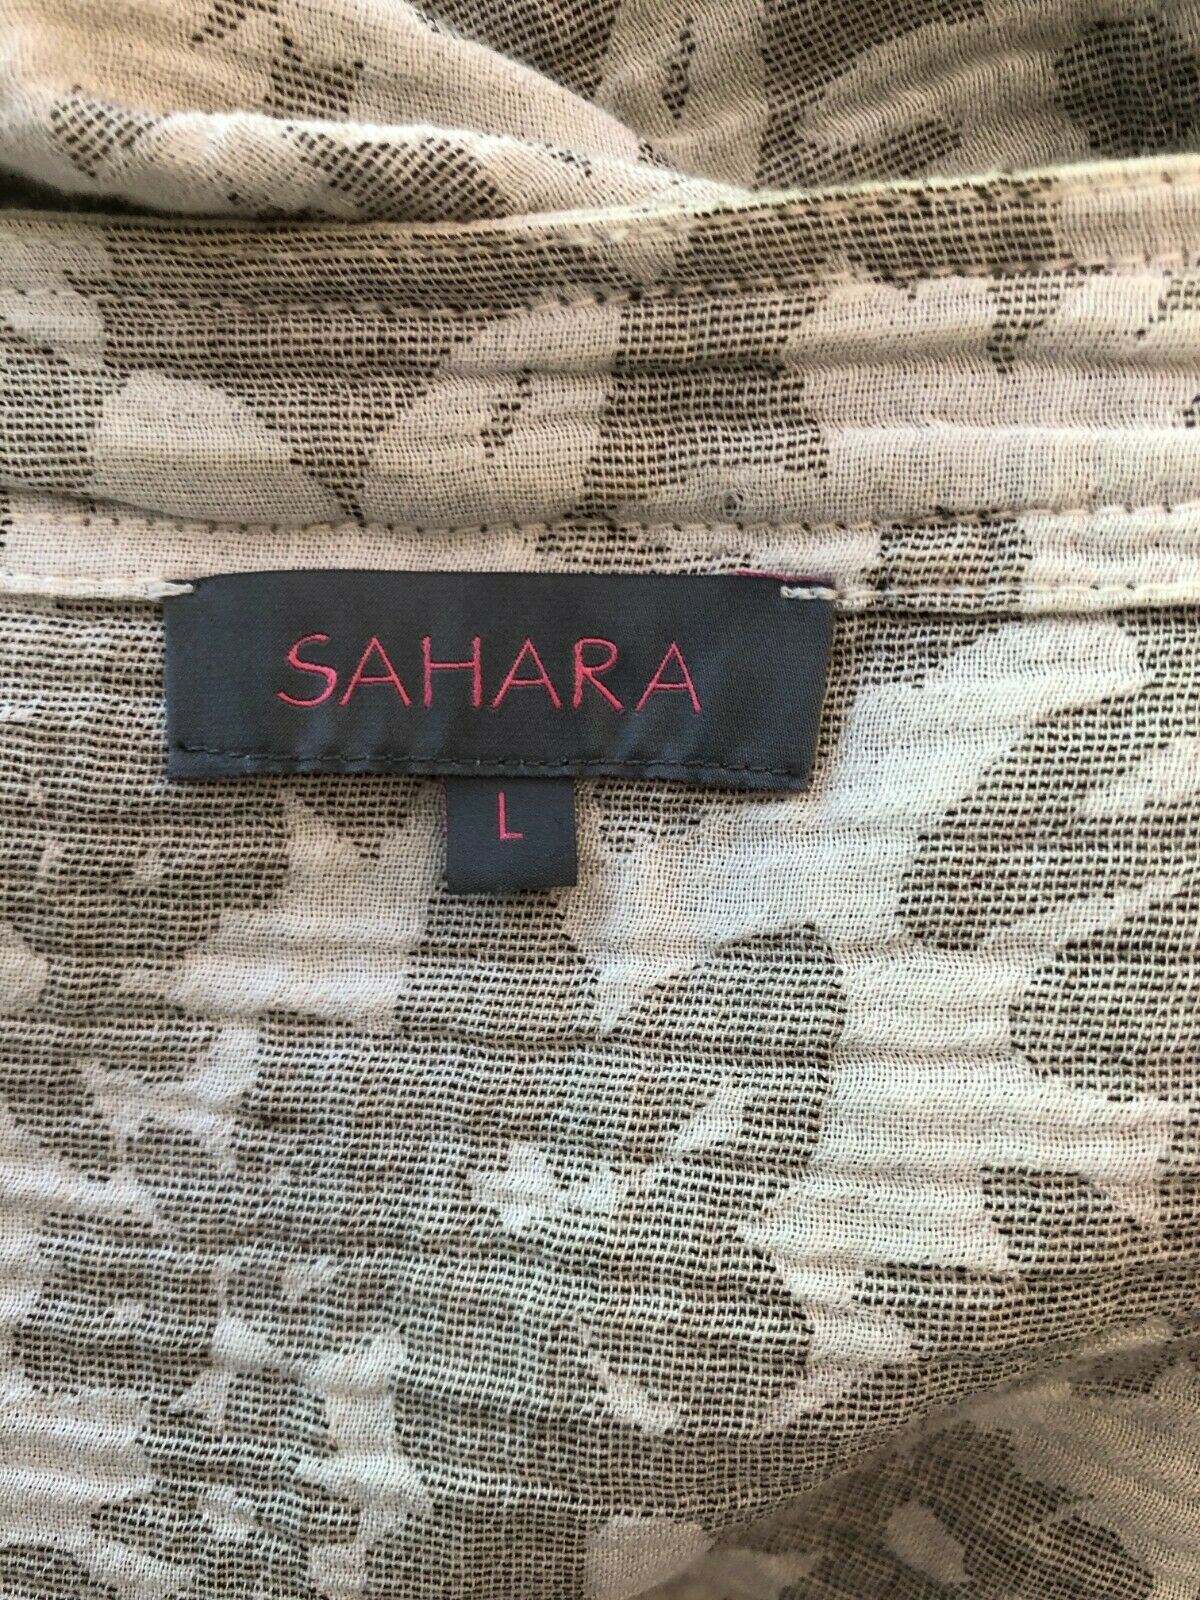 Sahara Ivory Cotton Floral Lagenlook Summer Jacket Size UK 18 US 14 EU 46 Timeless Fashions